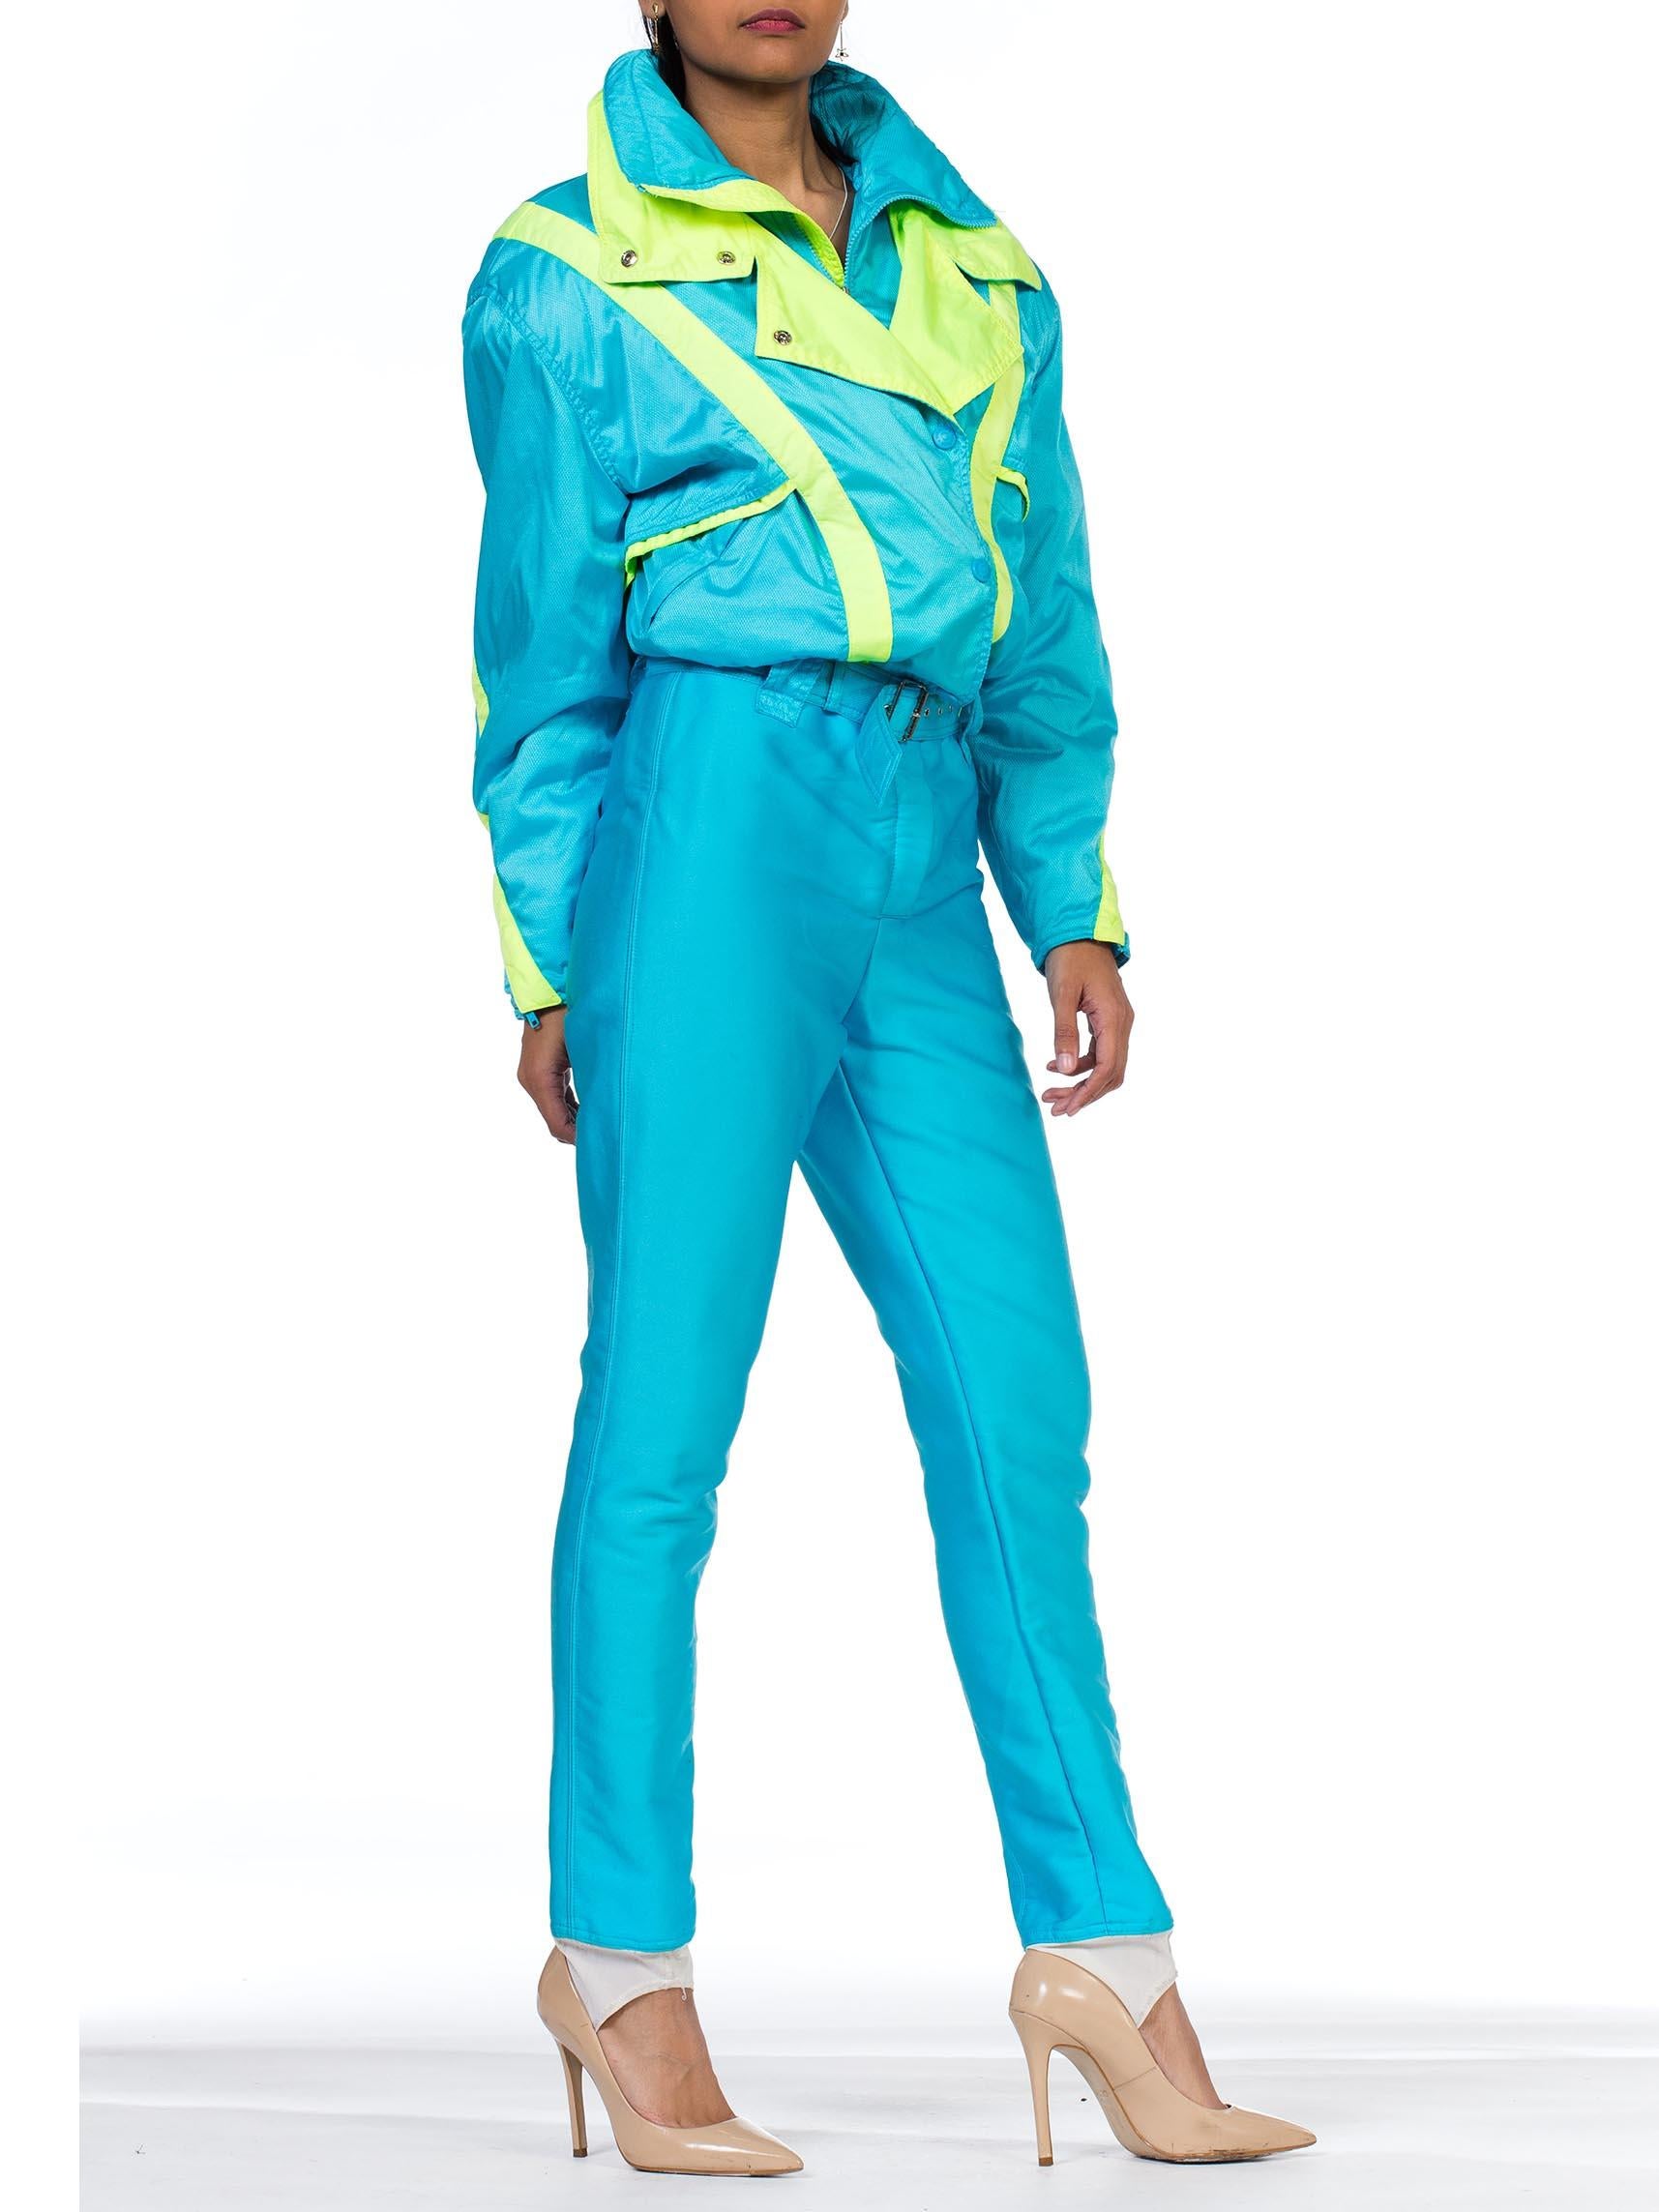 Blue 1980 - 1990s Neon Ski Suit with Shoulder Pads